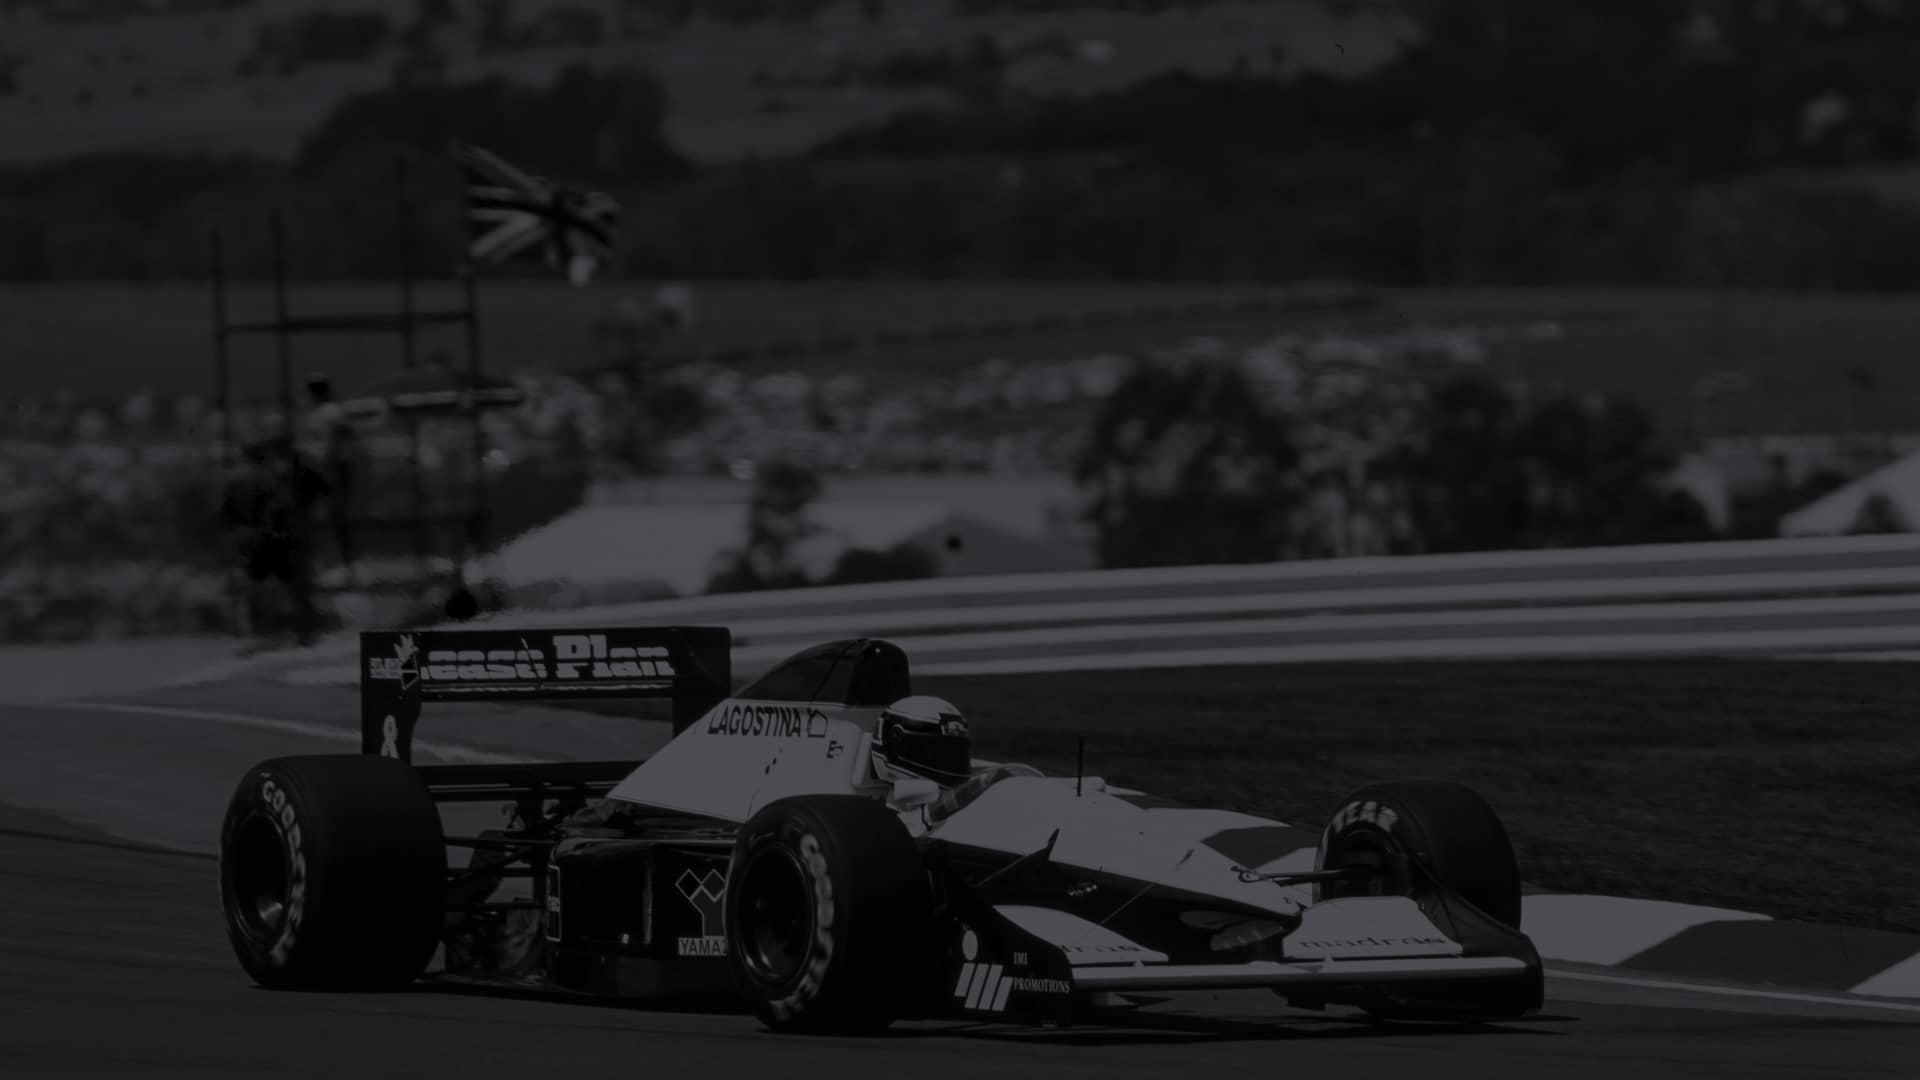 An F1 car on track